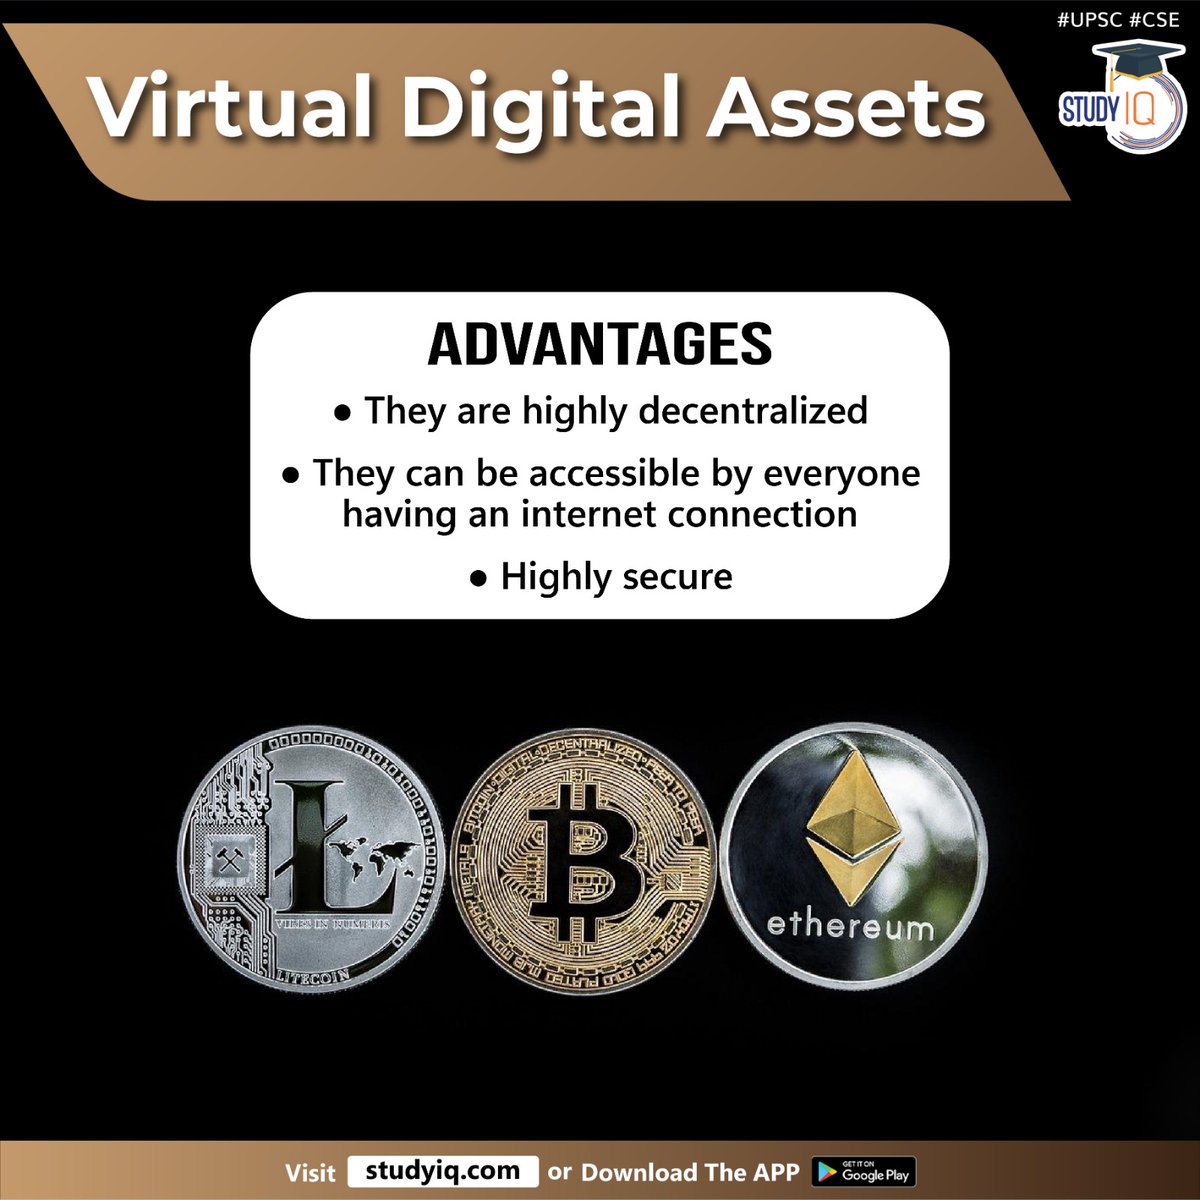 Virtual Digital Assets 

#virtualdigitalassets #whyinnews #vdas #india #highsecure #internetconnection #regulatoryframework #digitalasset #blockchain #uniqueasset #hacked #sold #puchased #nonfungibletokens #nft #upsc #cse #ips #ias